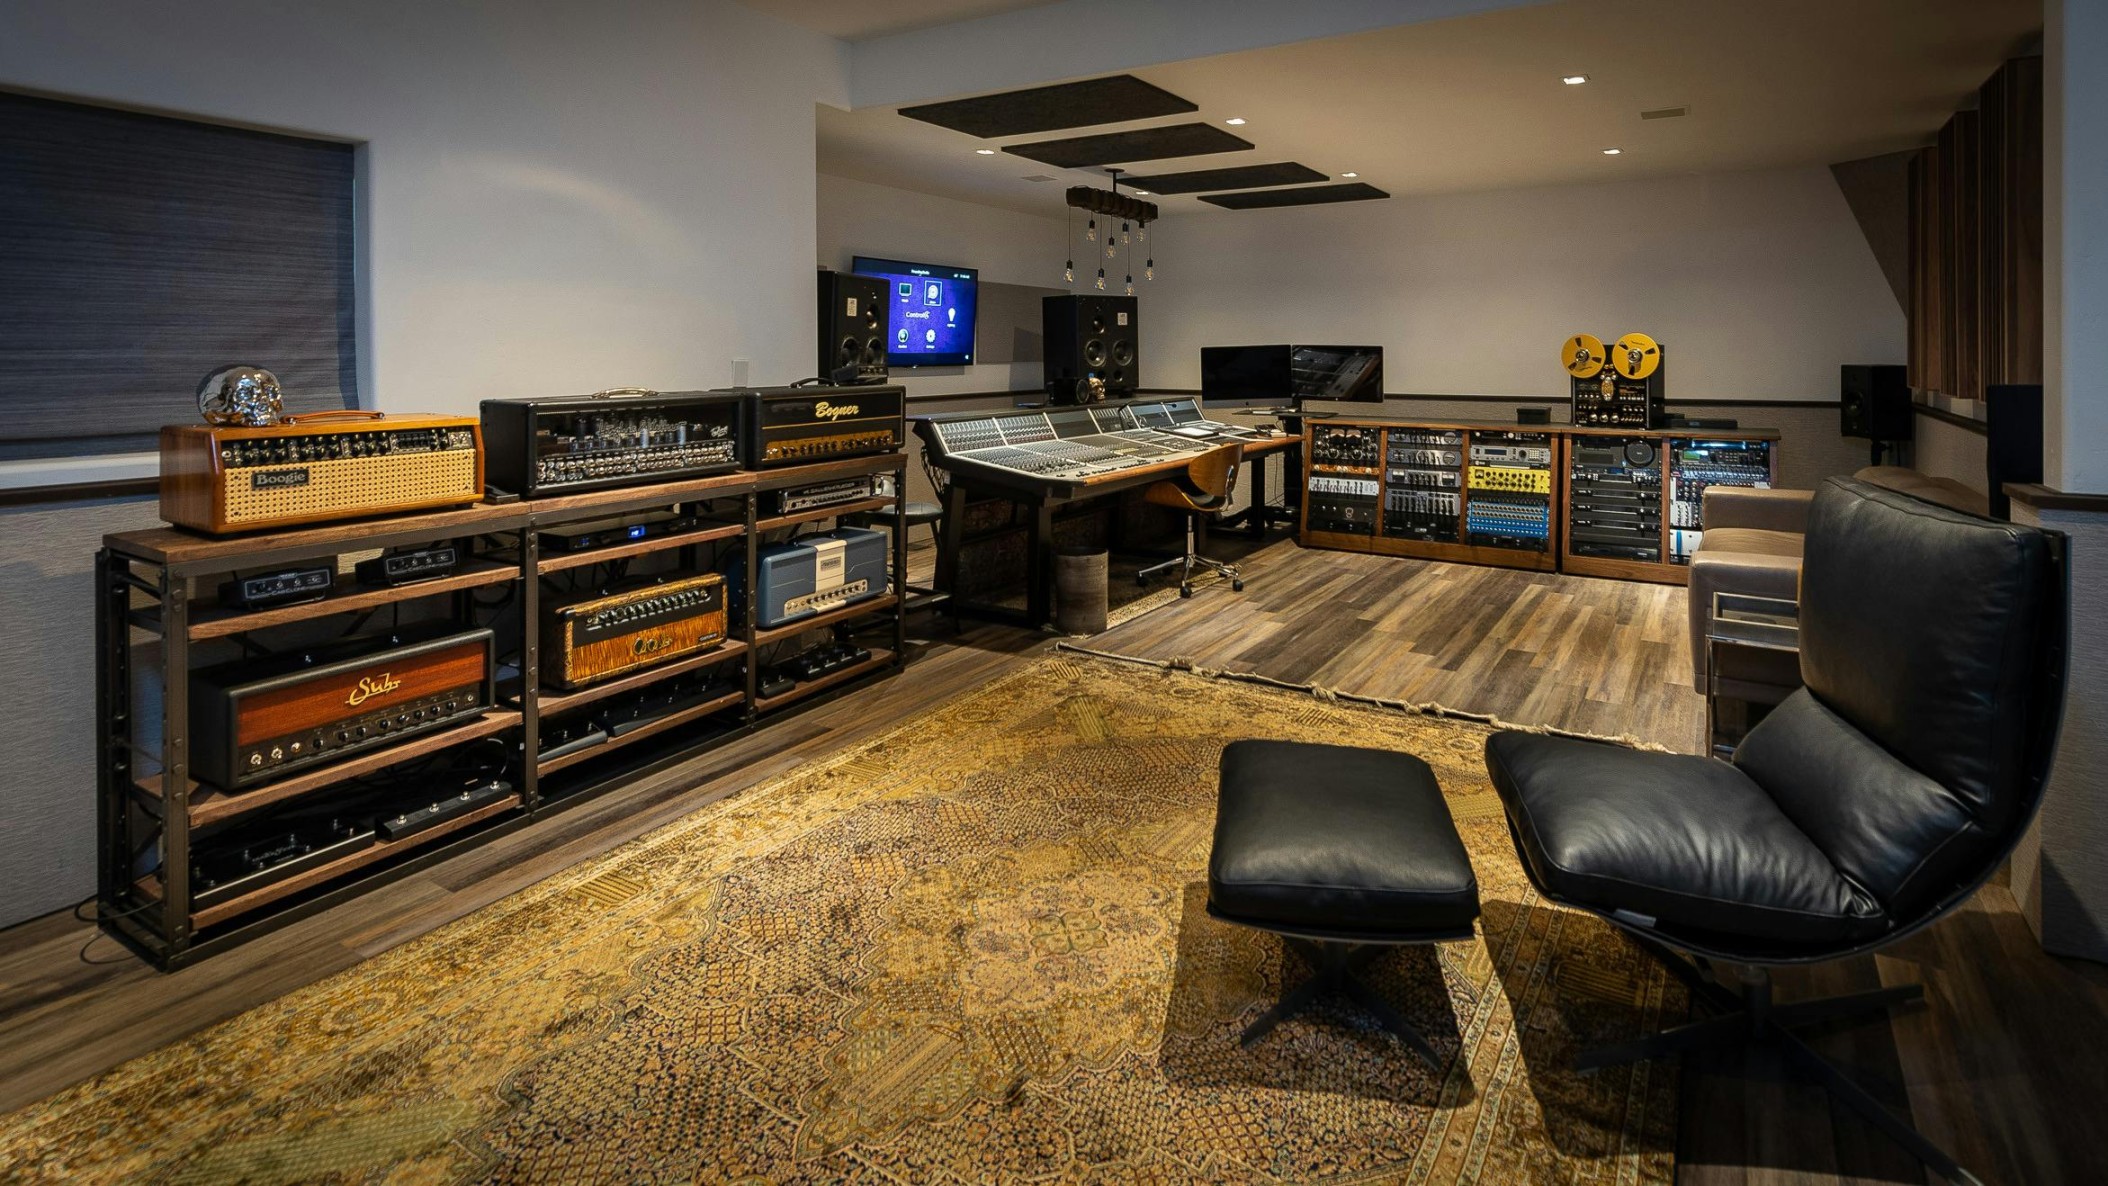 Incredible Home Recording Studio Ideas on Houzz - Output